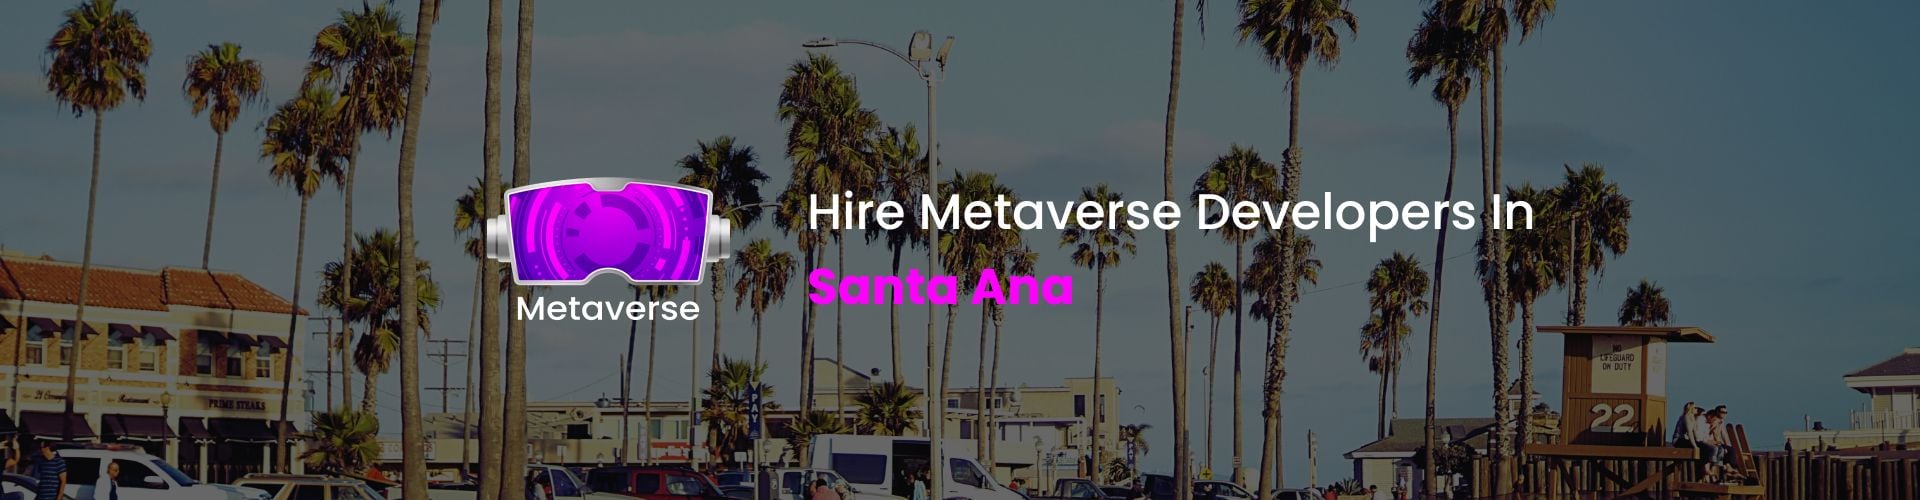 hire metaverse developers in santa ana